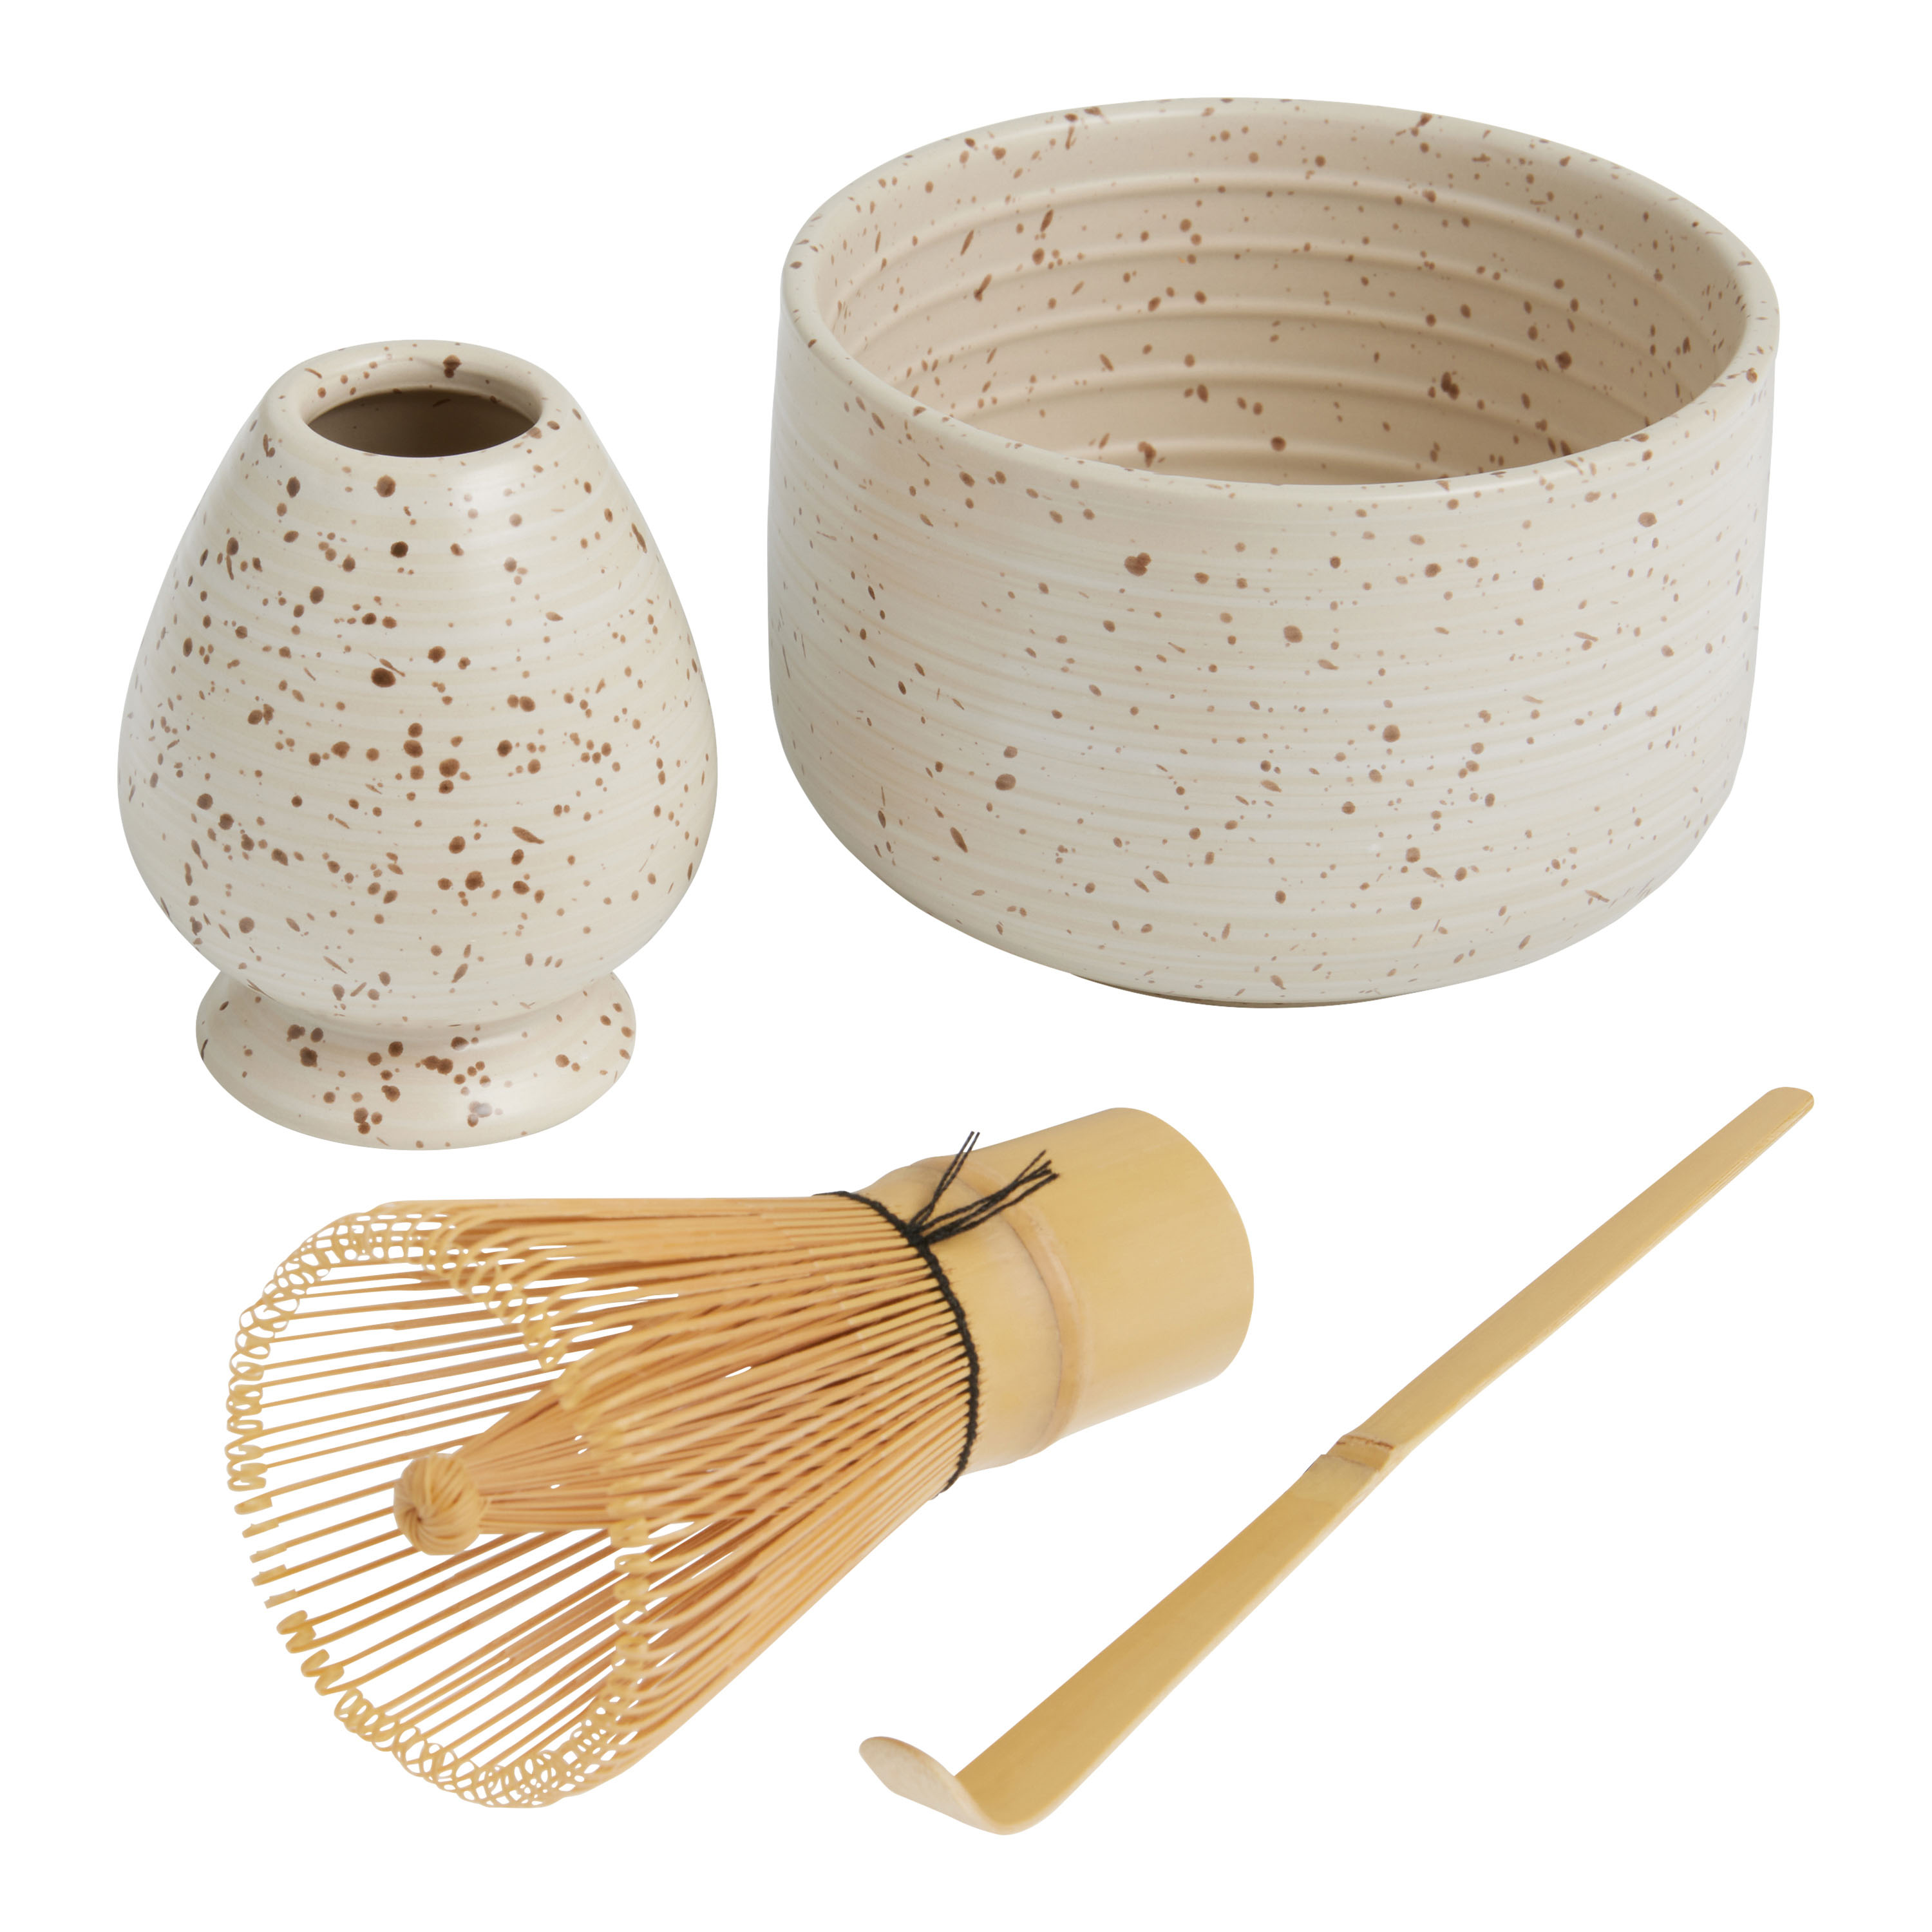 Matcha Tea - Bamboo Whisk - Gift Basket